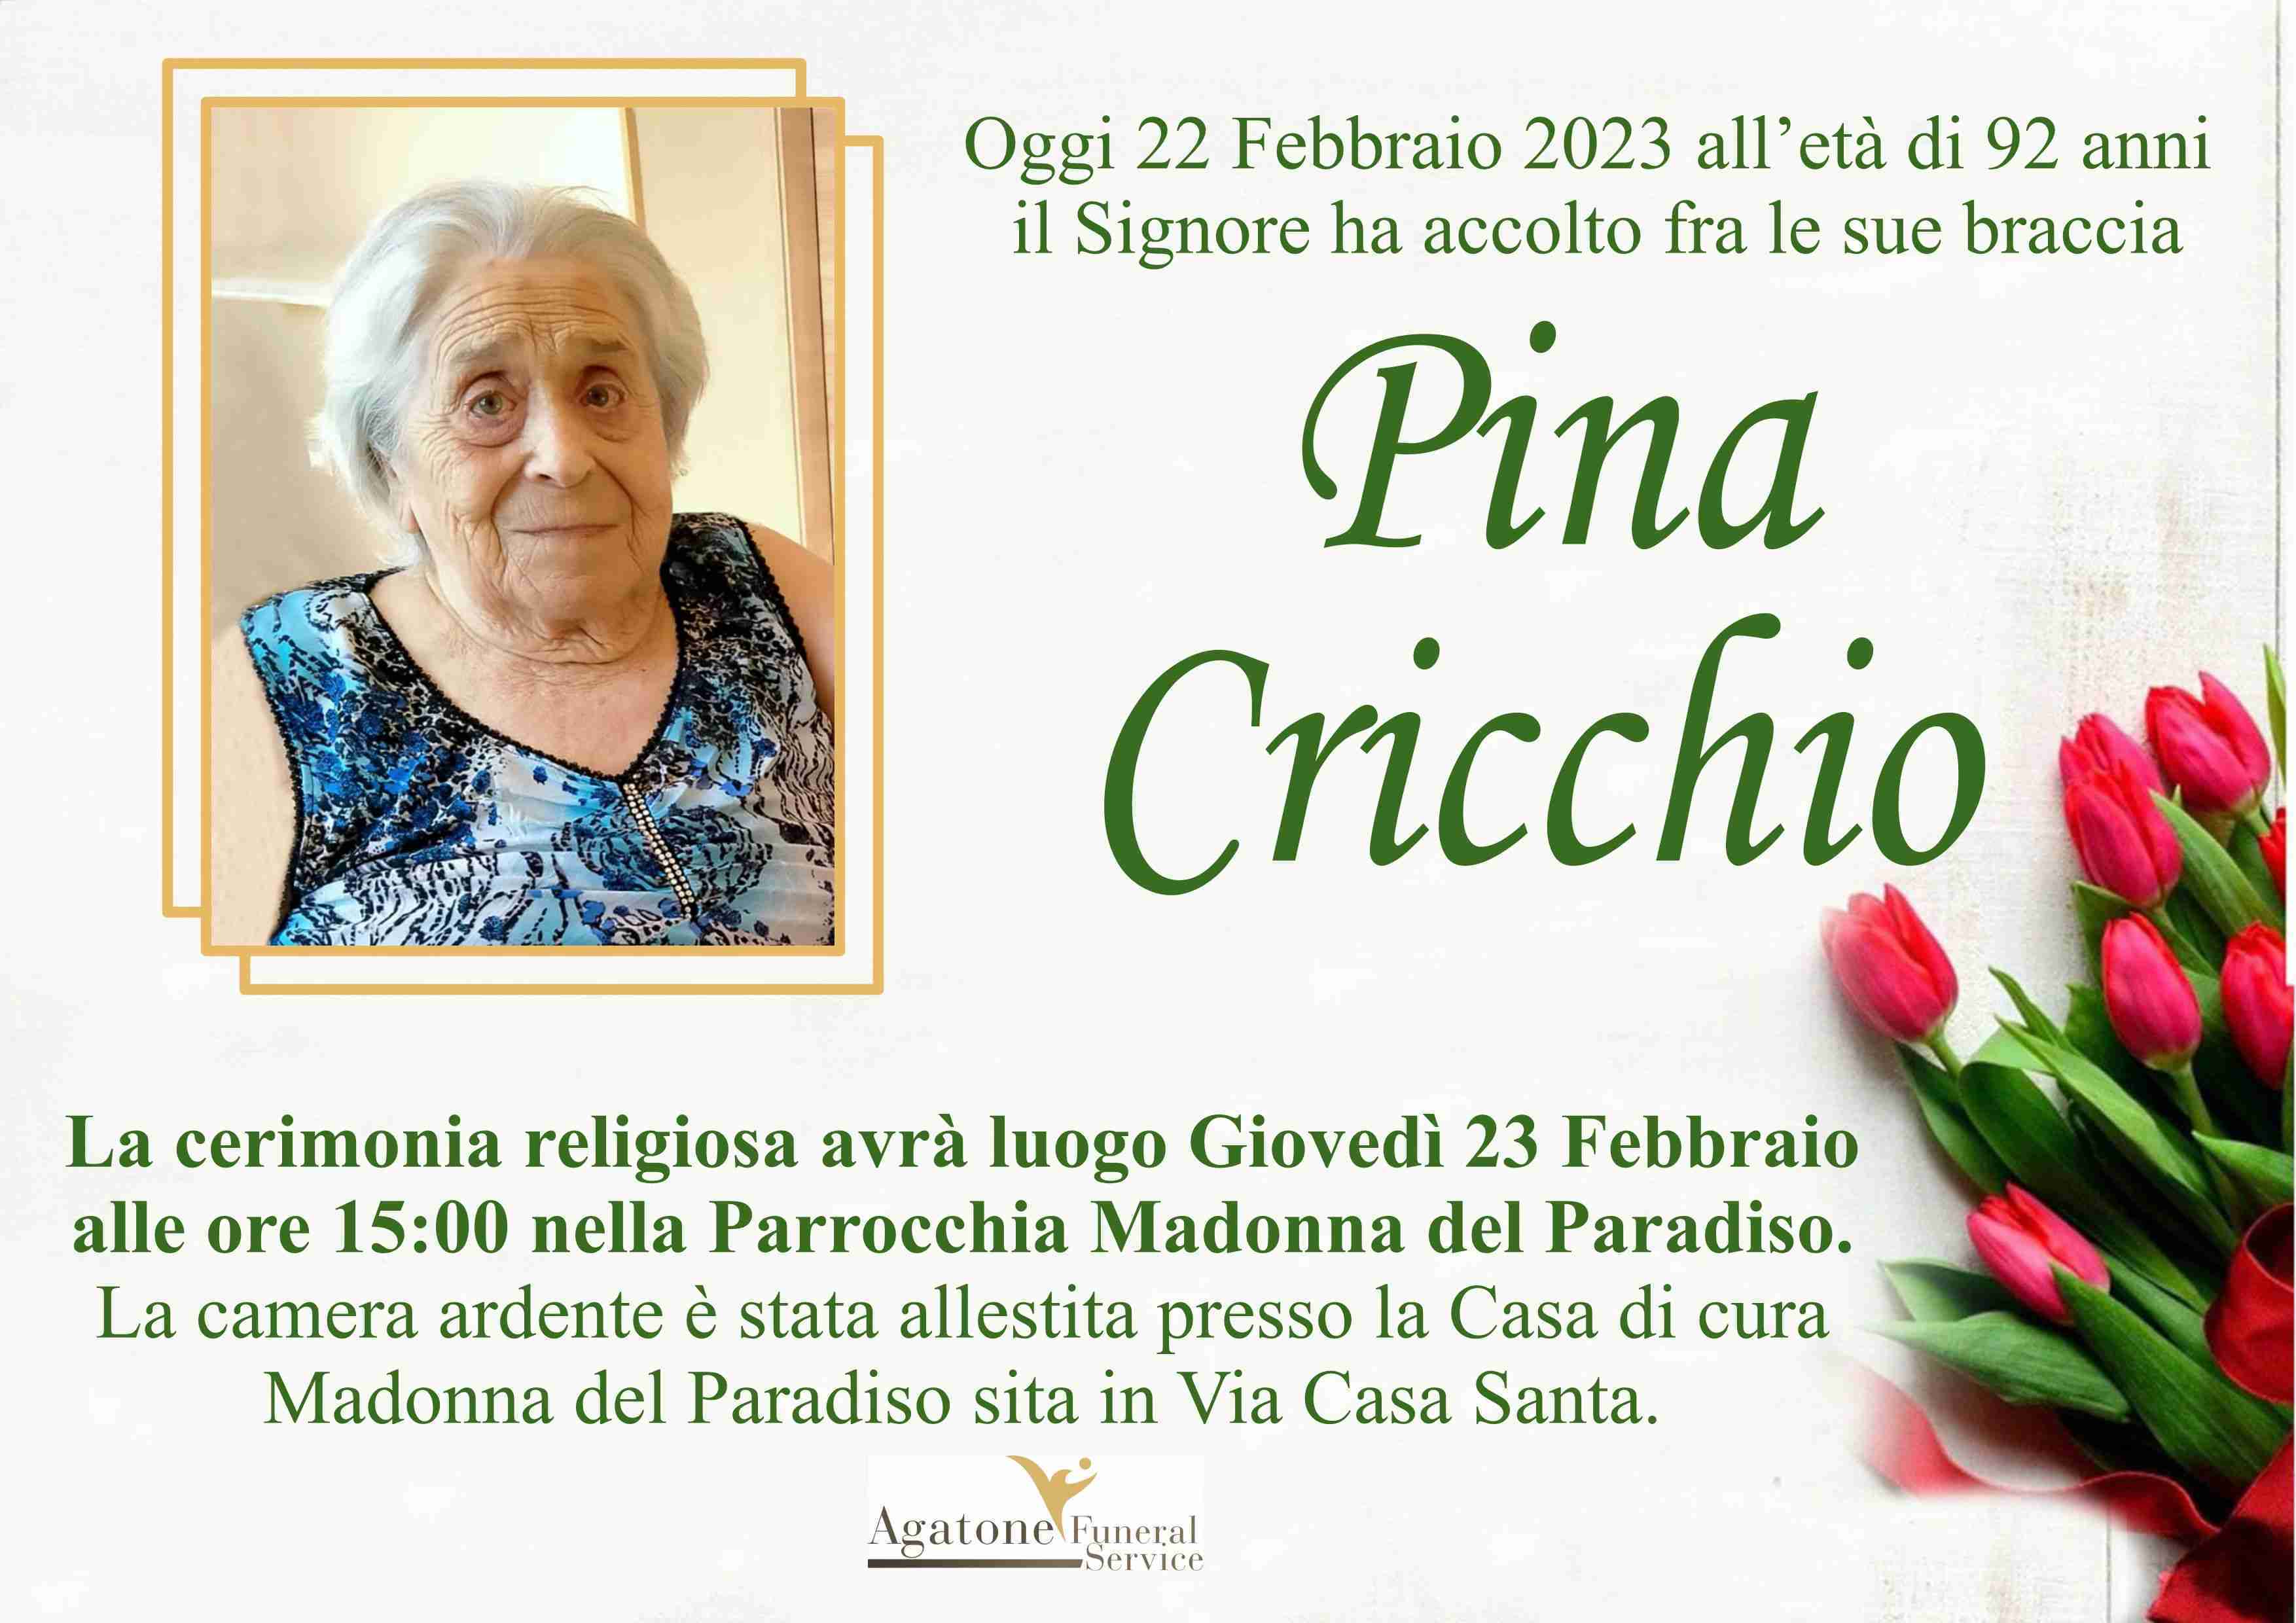 Pina Cricchio